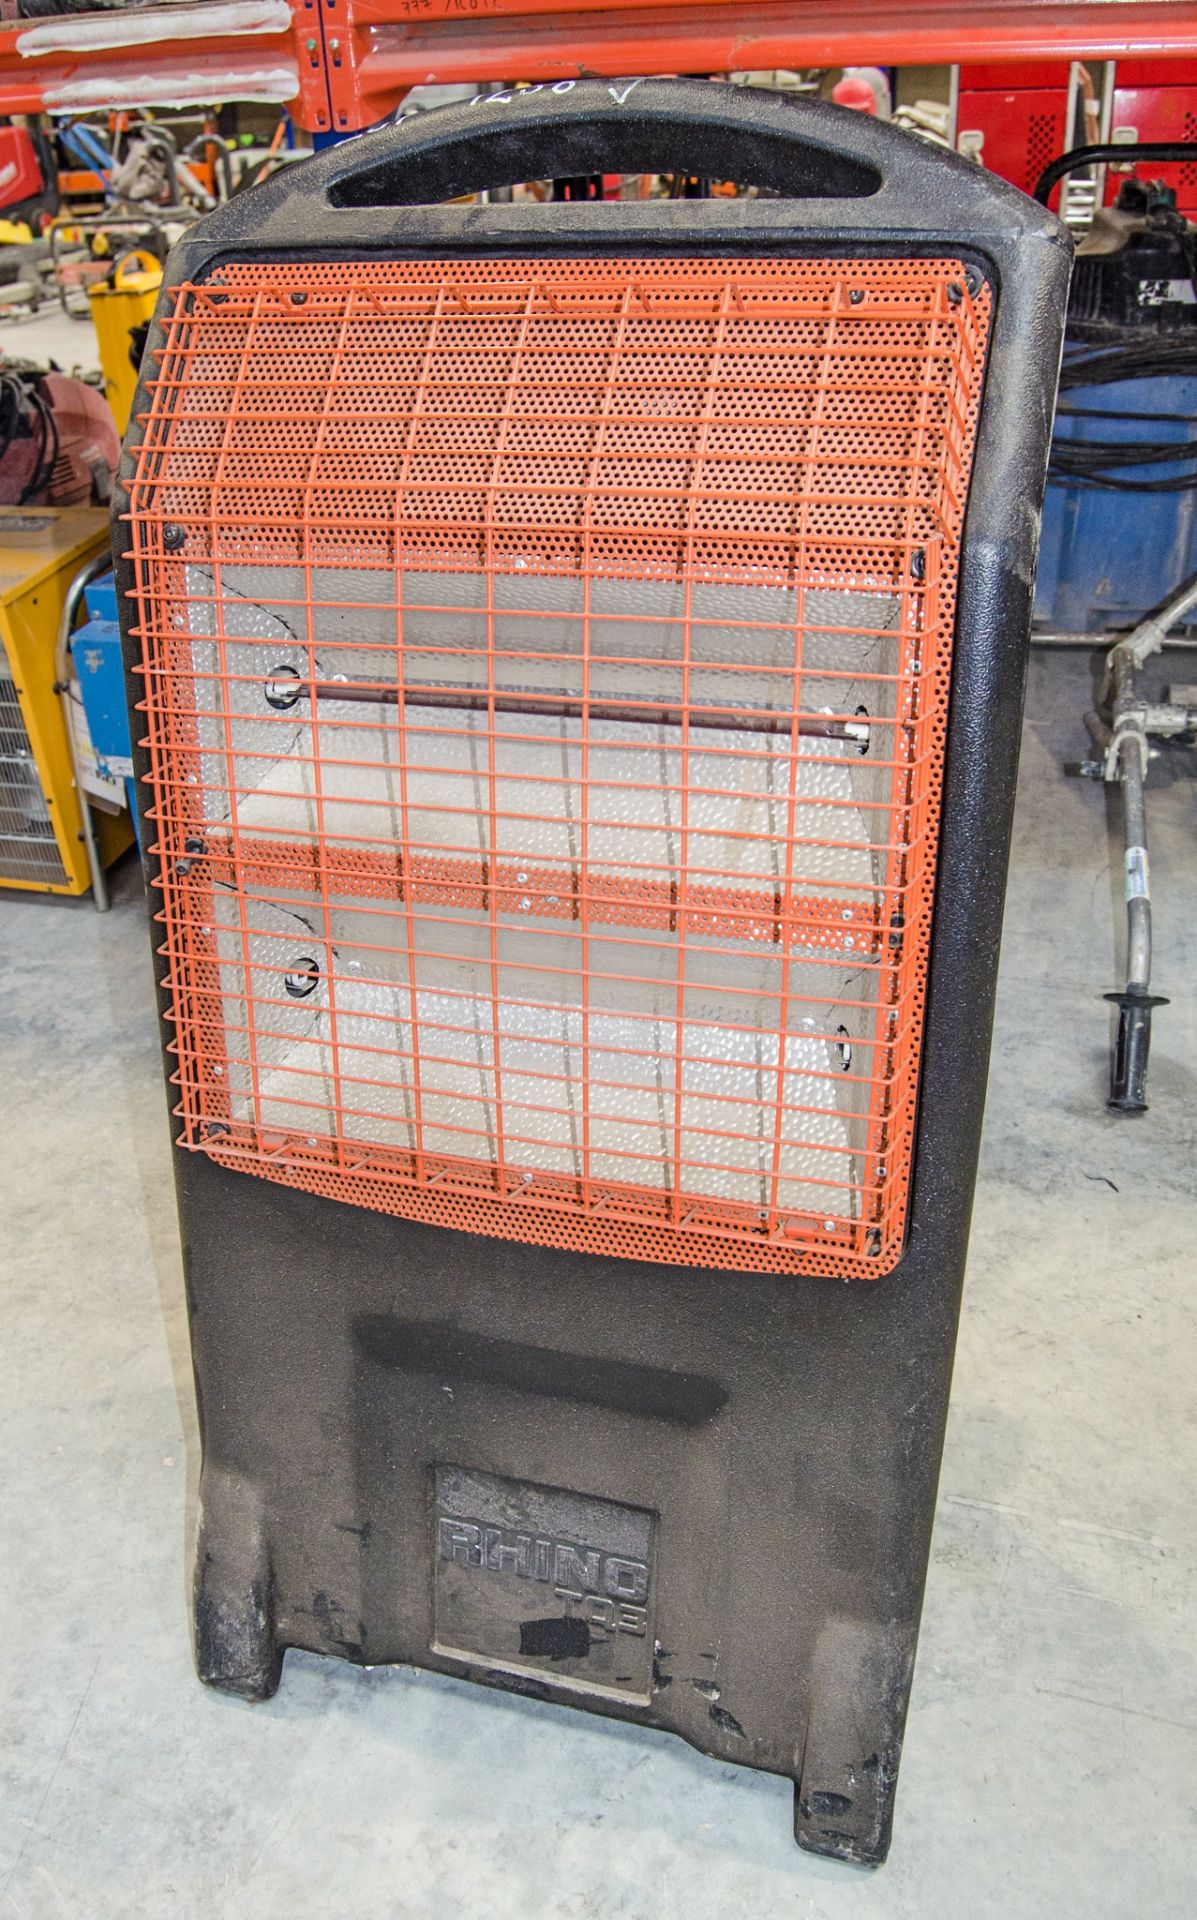 Rhino TQ3 110v infrared heater EXP2979